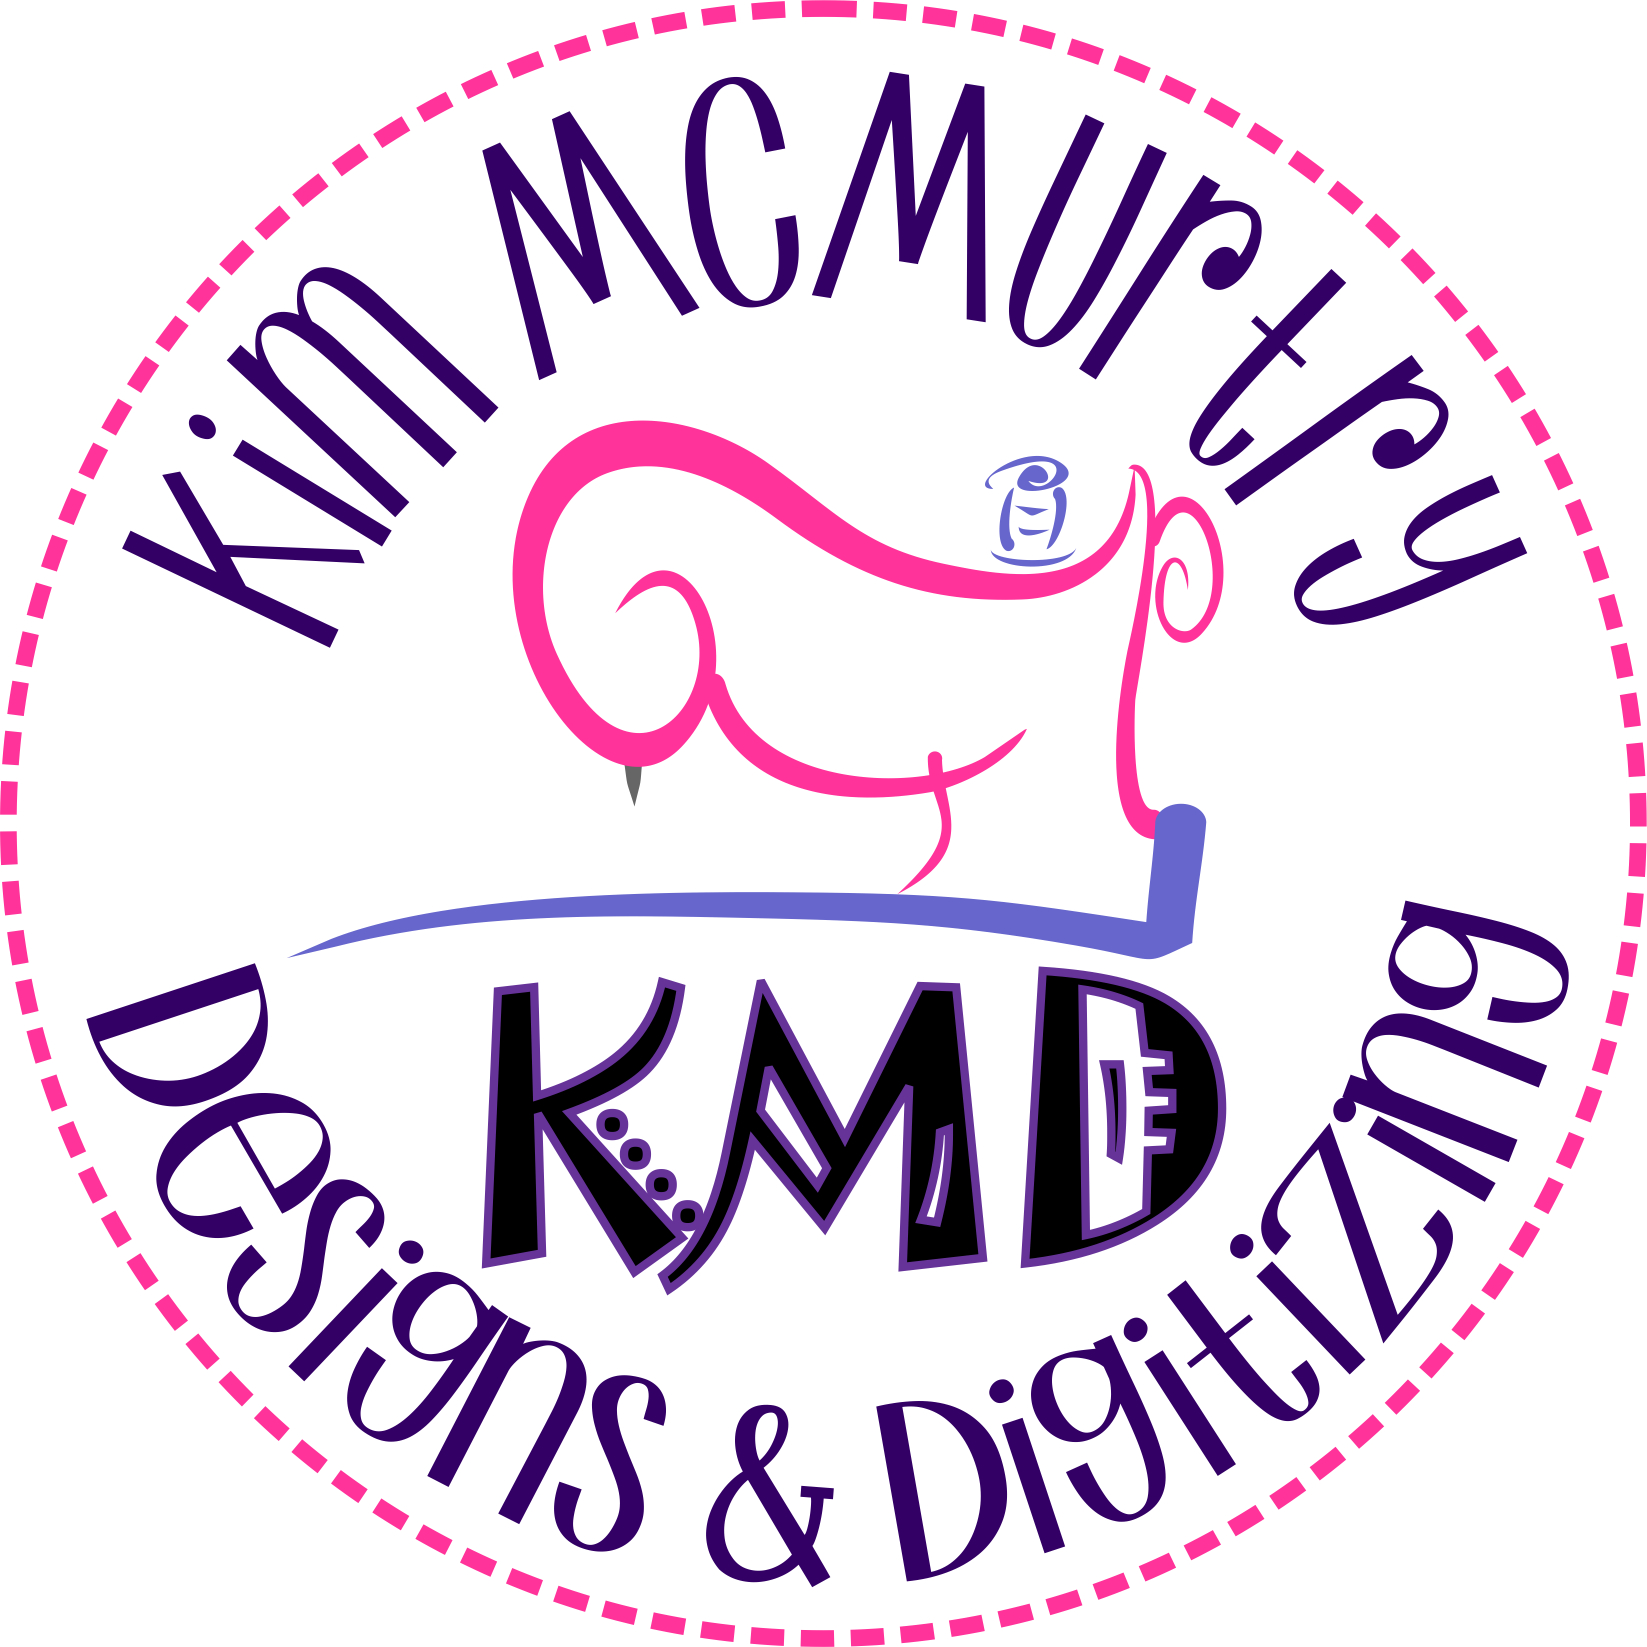 Kim McMurtry Digitizing & Designs